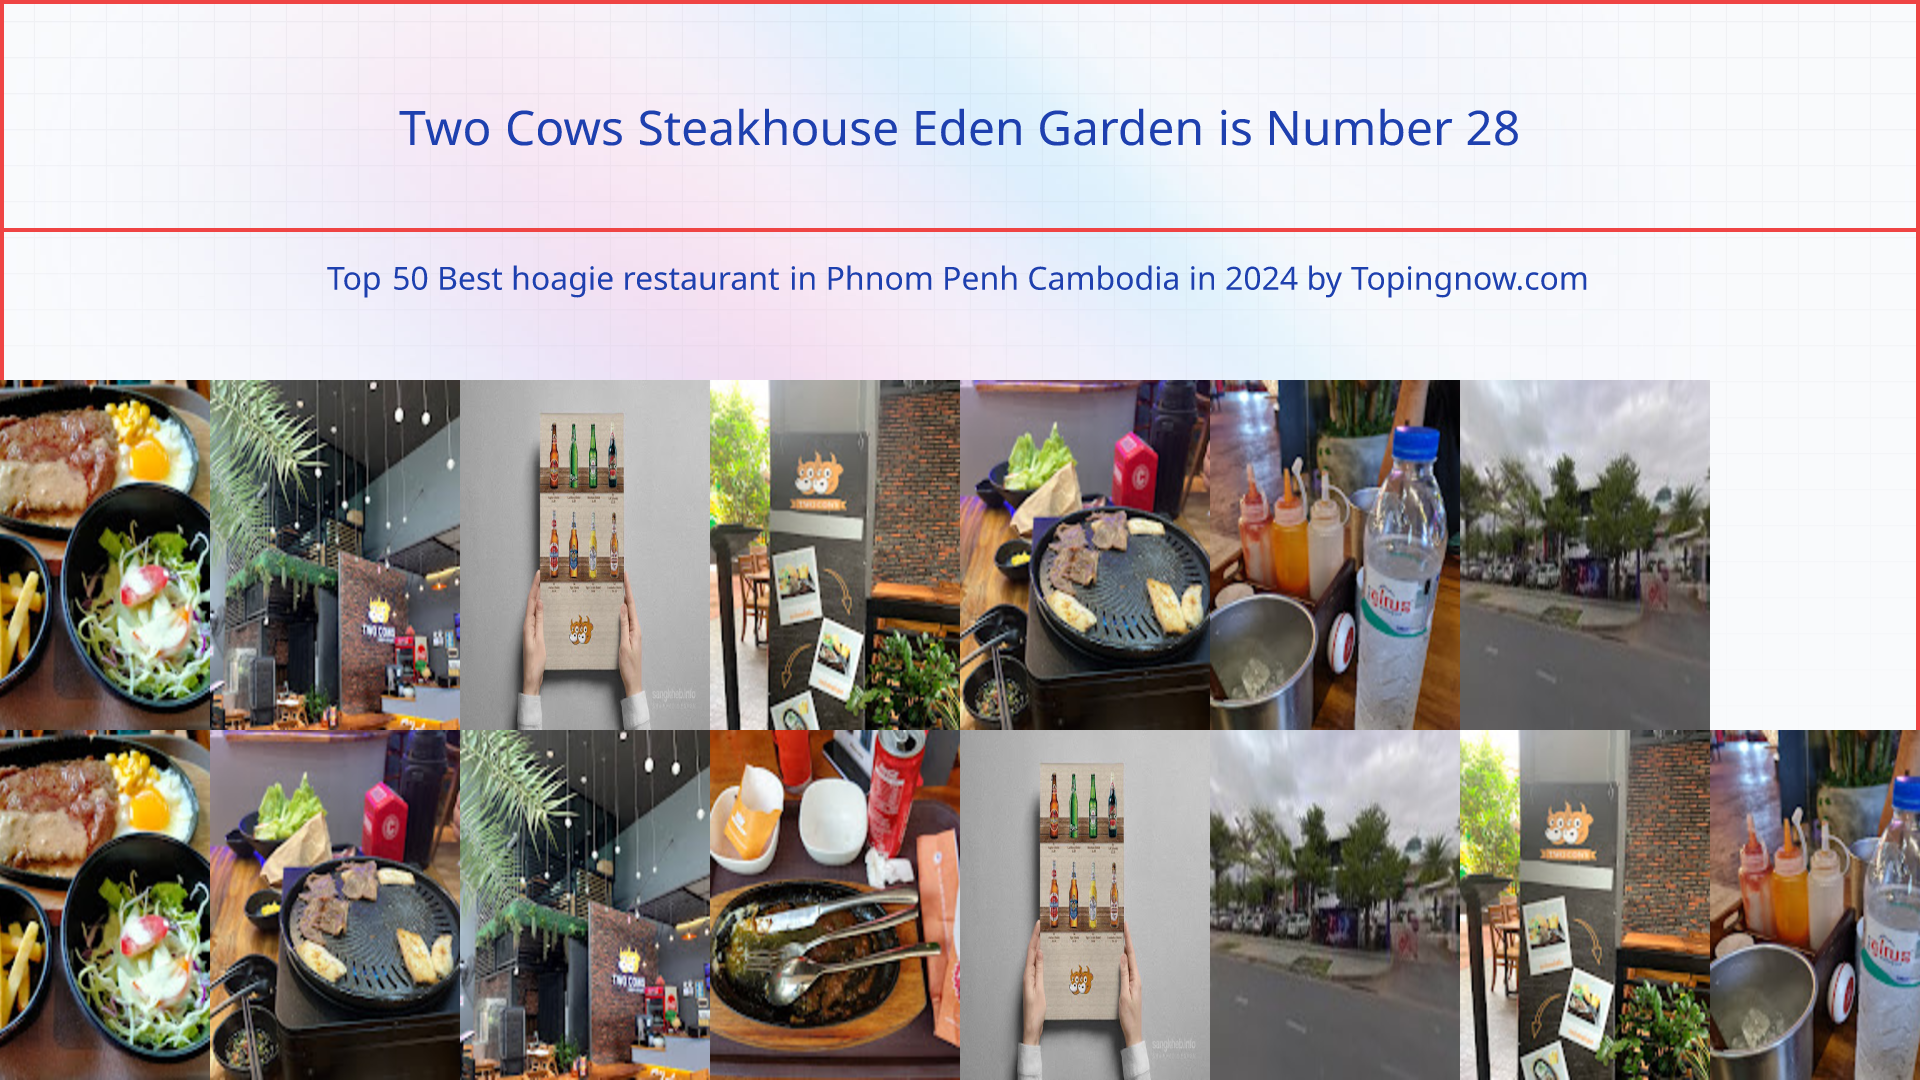 Two Cows Steakhouse Eden Garden: Top 50 Best hoagie restaurant in Phnom Penh Cambodia in 2024